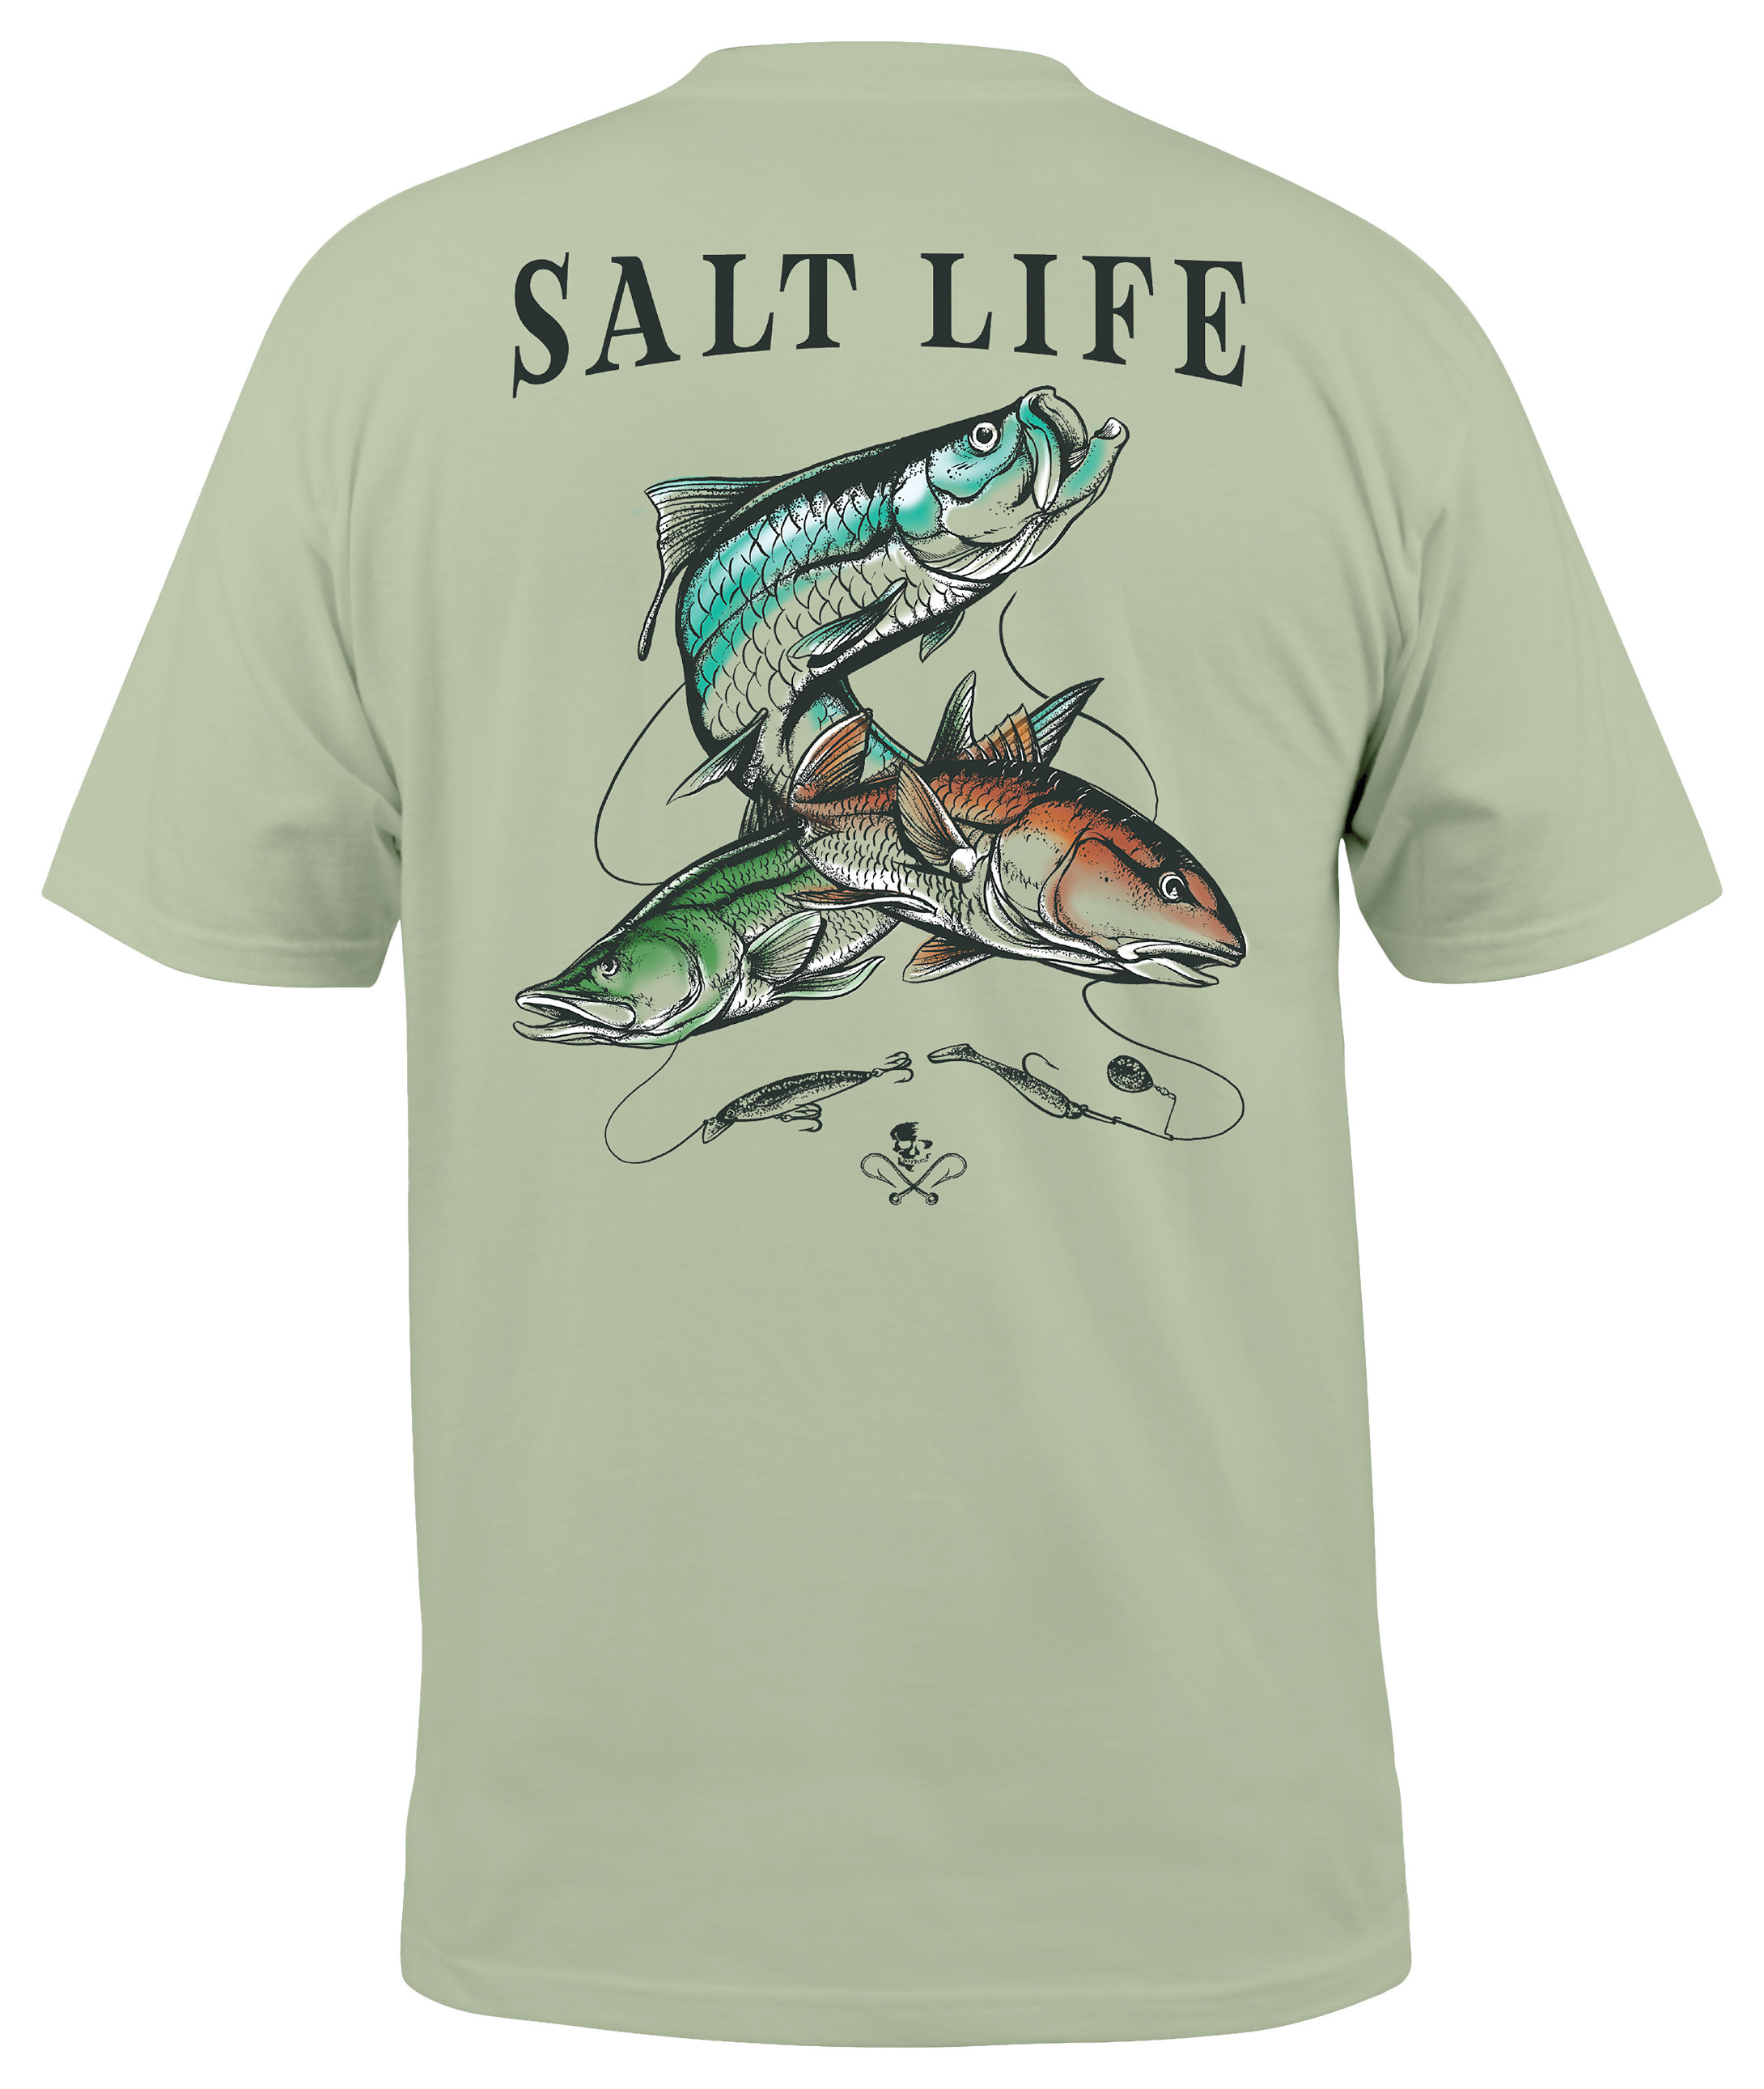 Fishing Jumping Snook Adult Short Sleeve T-Shirt-Tan-XL